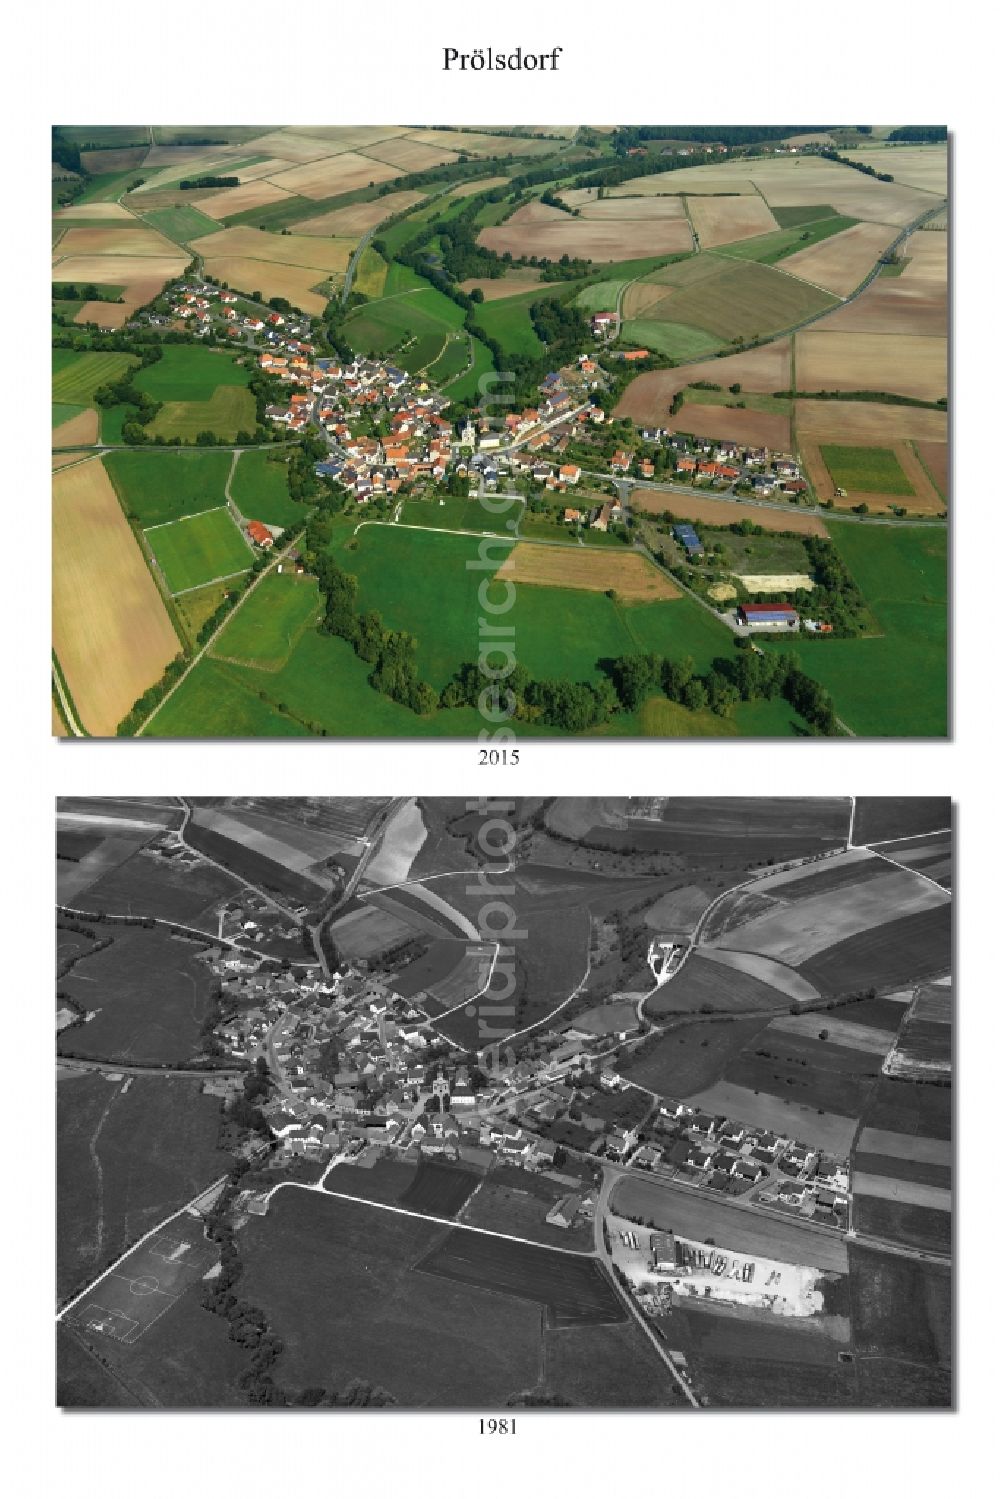 Aerial image Prölsdorf - 1981 and 2015 village - view change of Proelsdorf in the state Bavaria